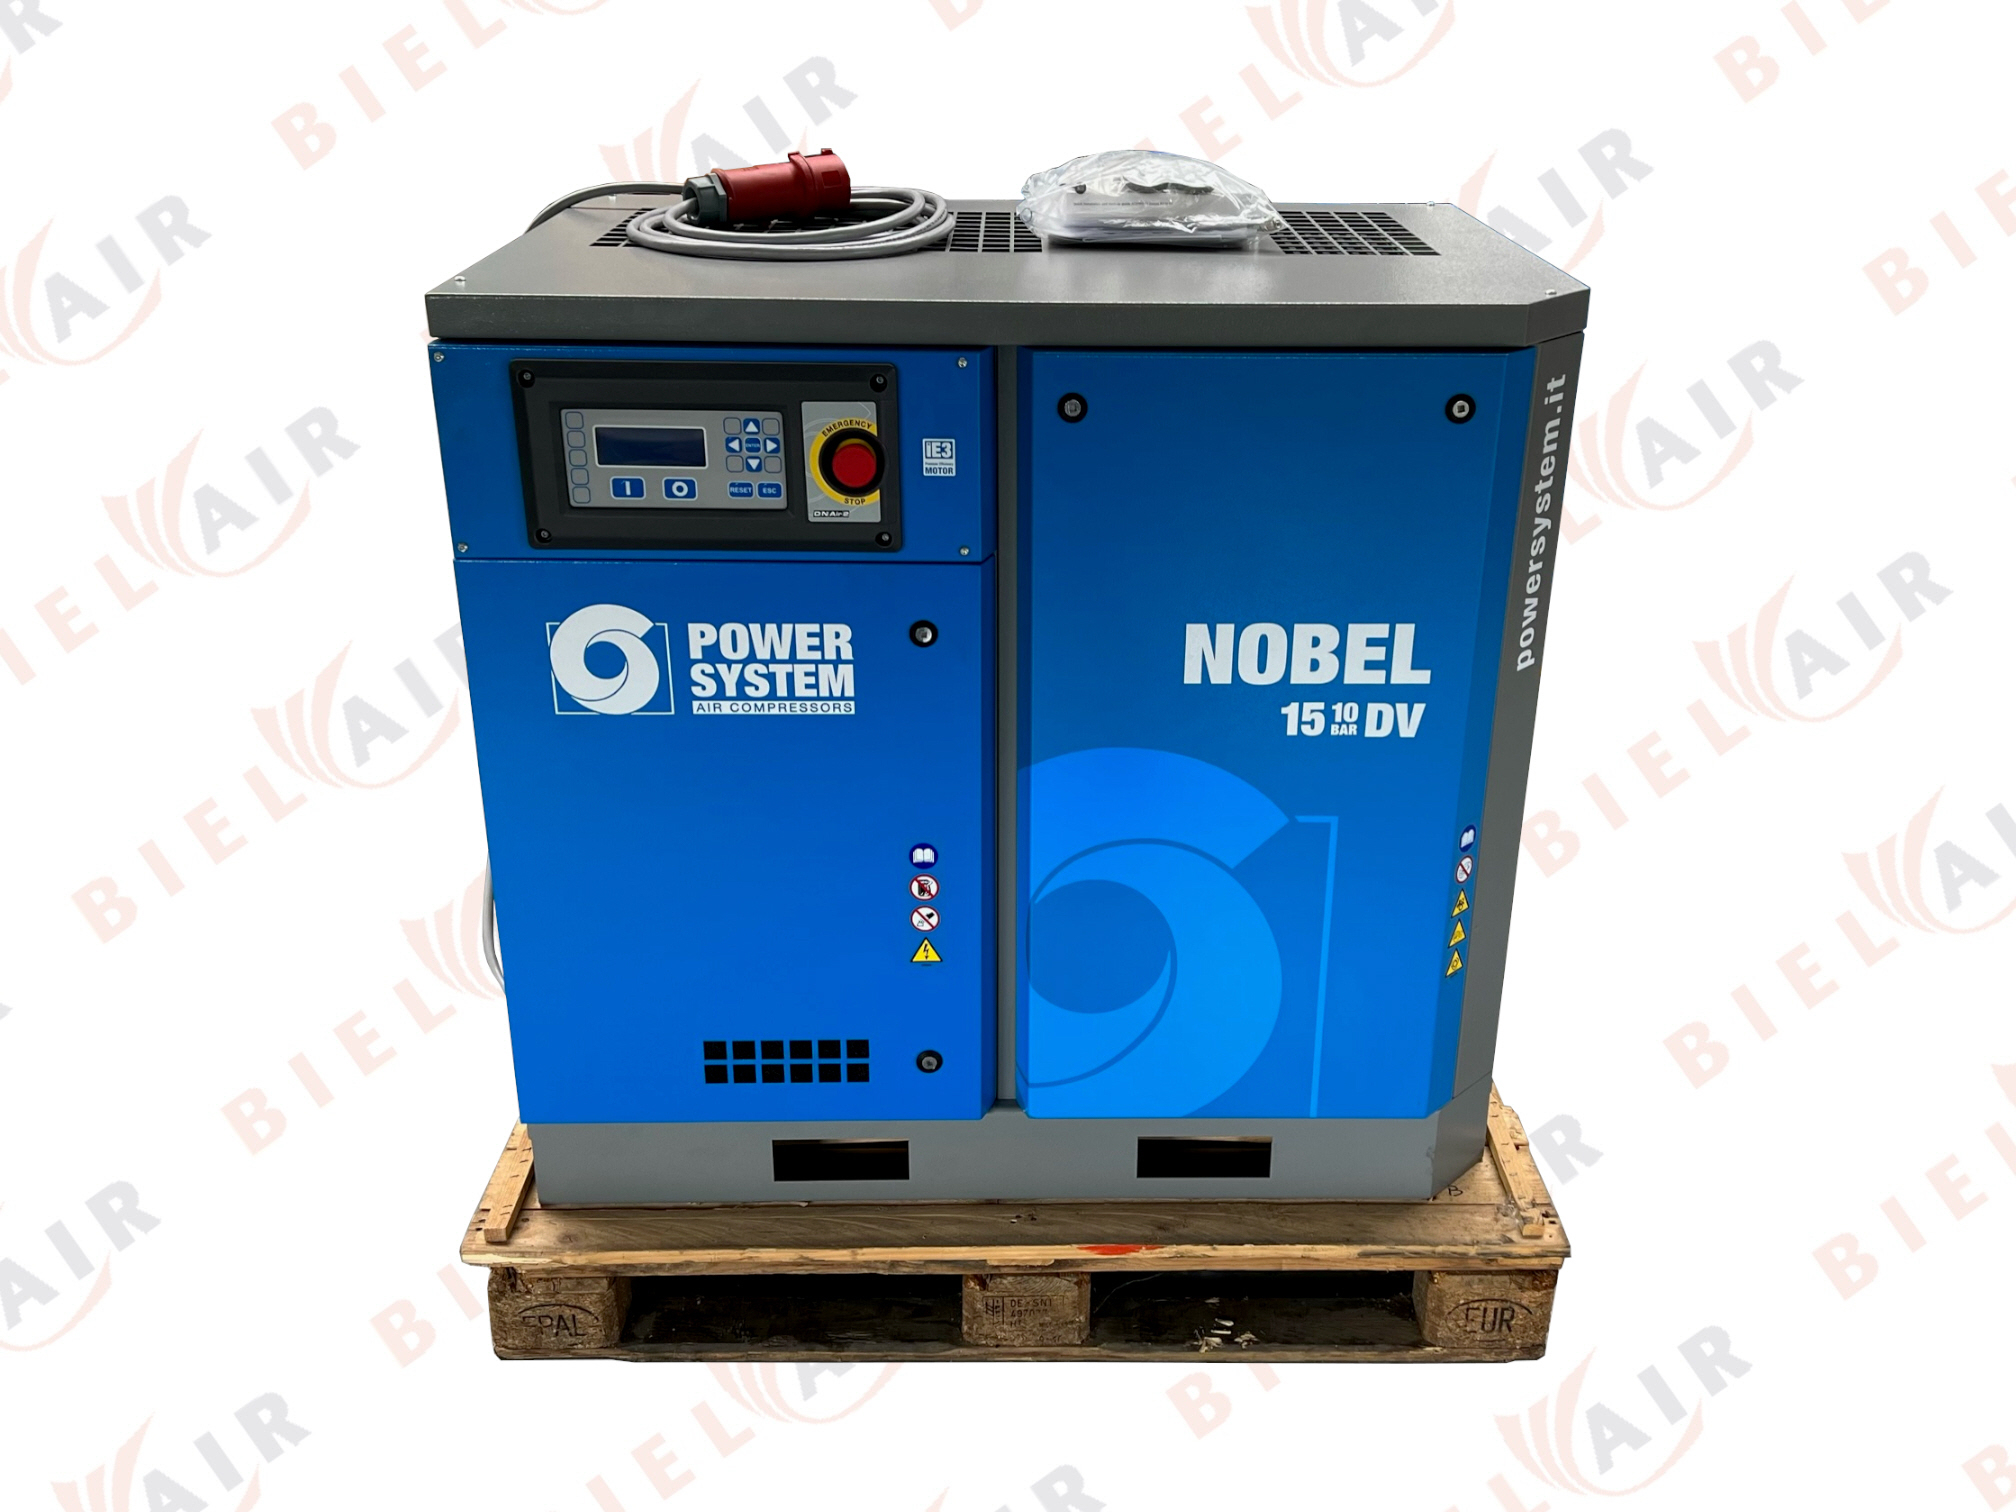 POWERSYSTEM Schraubenkompressor NOBEL 15-10 DV (IE3) DNAir2 Gebraucht Gebrauchte Schraubenkompressoren